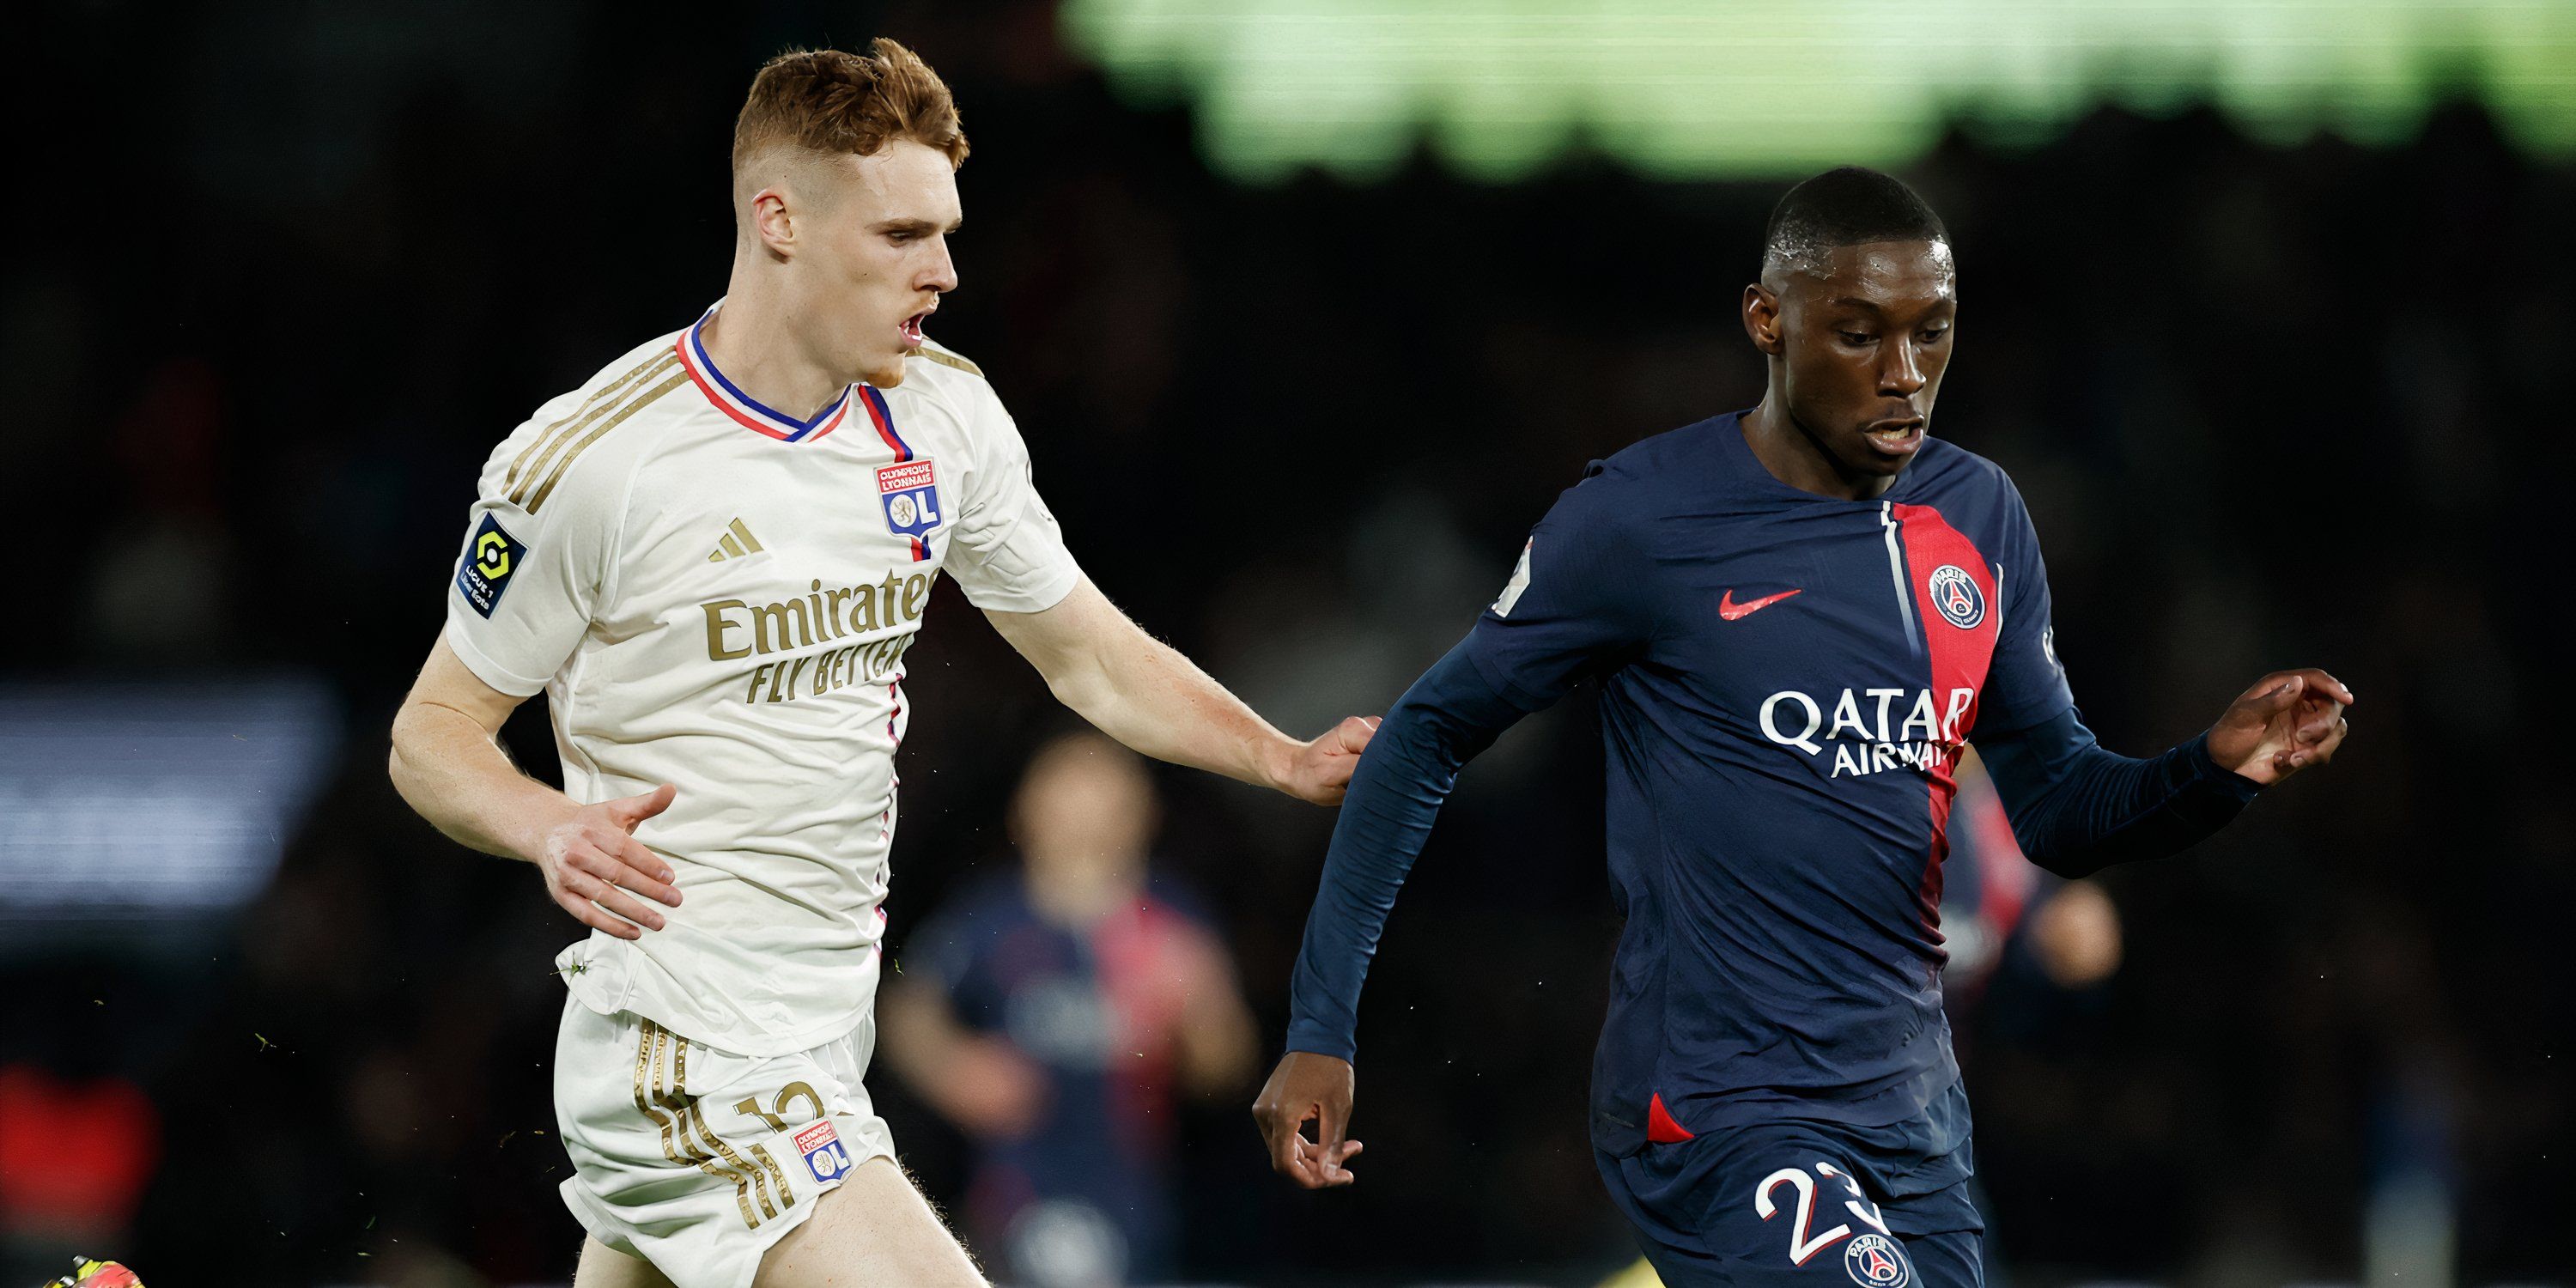 Lyon defender Jake O'Brien and Paris Saint-Germain attacker Randal Kolo Muani battling for possession